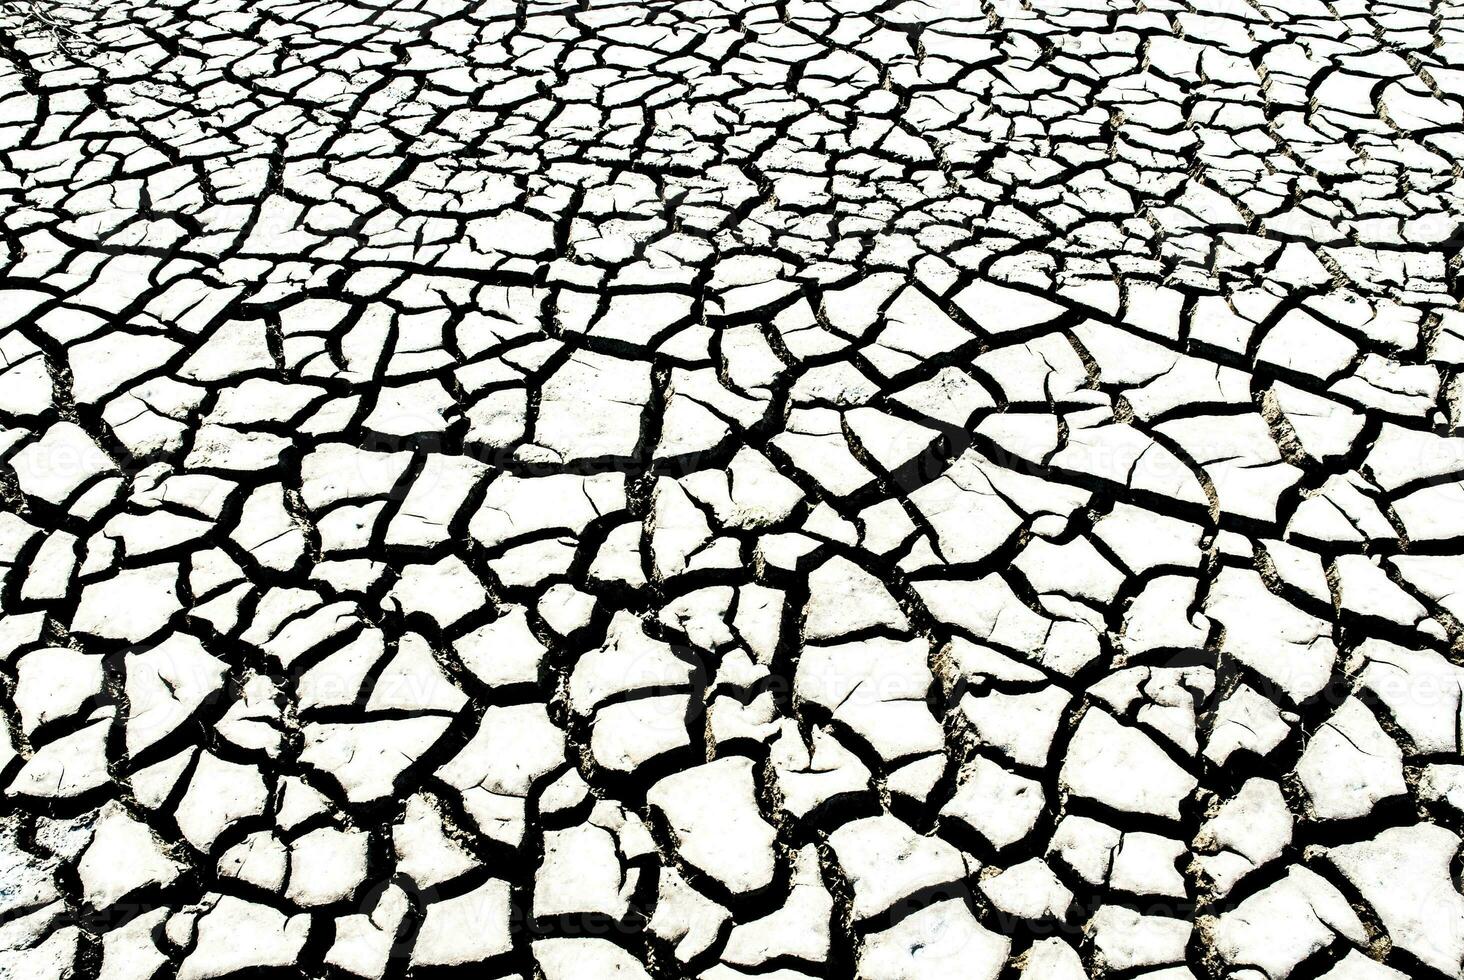 sec sol dans pampa environnement , patagonie, Argentine. photo